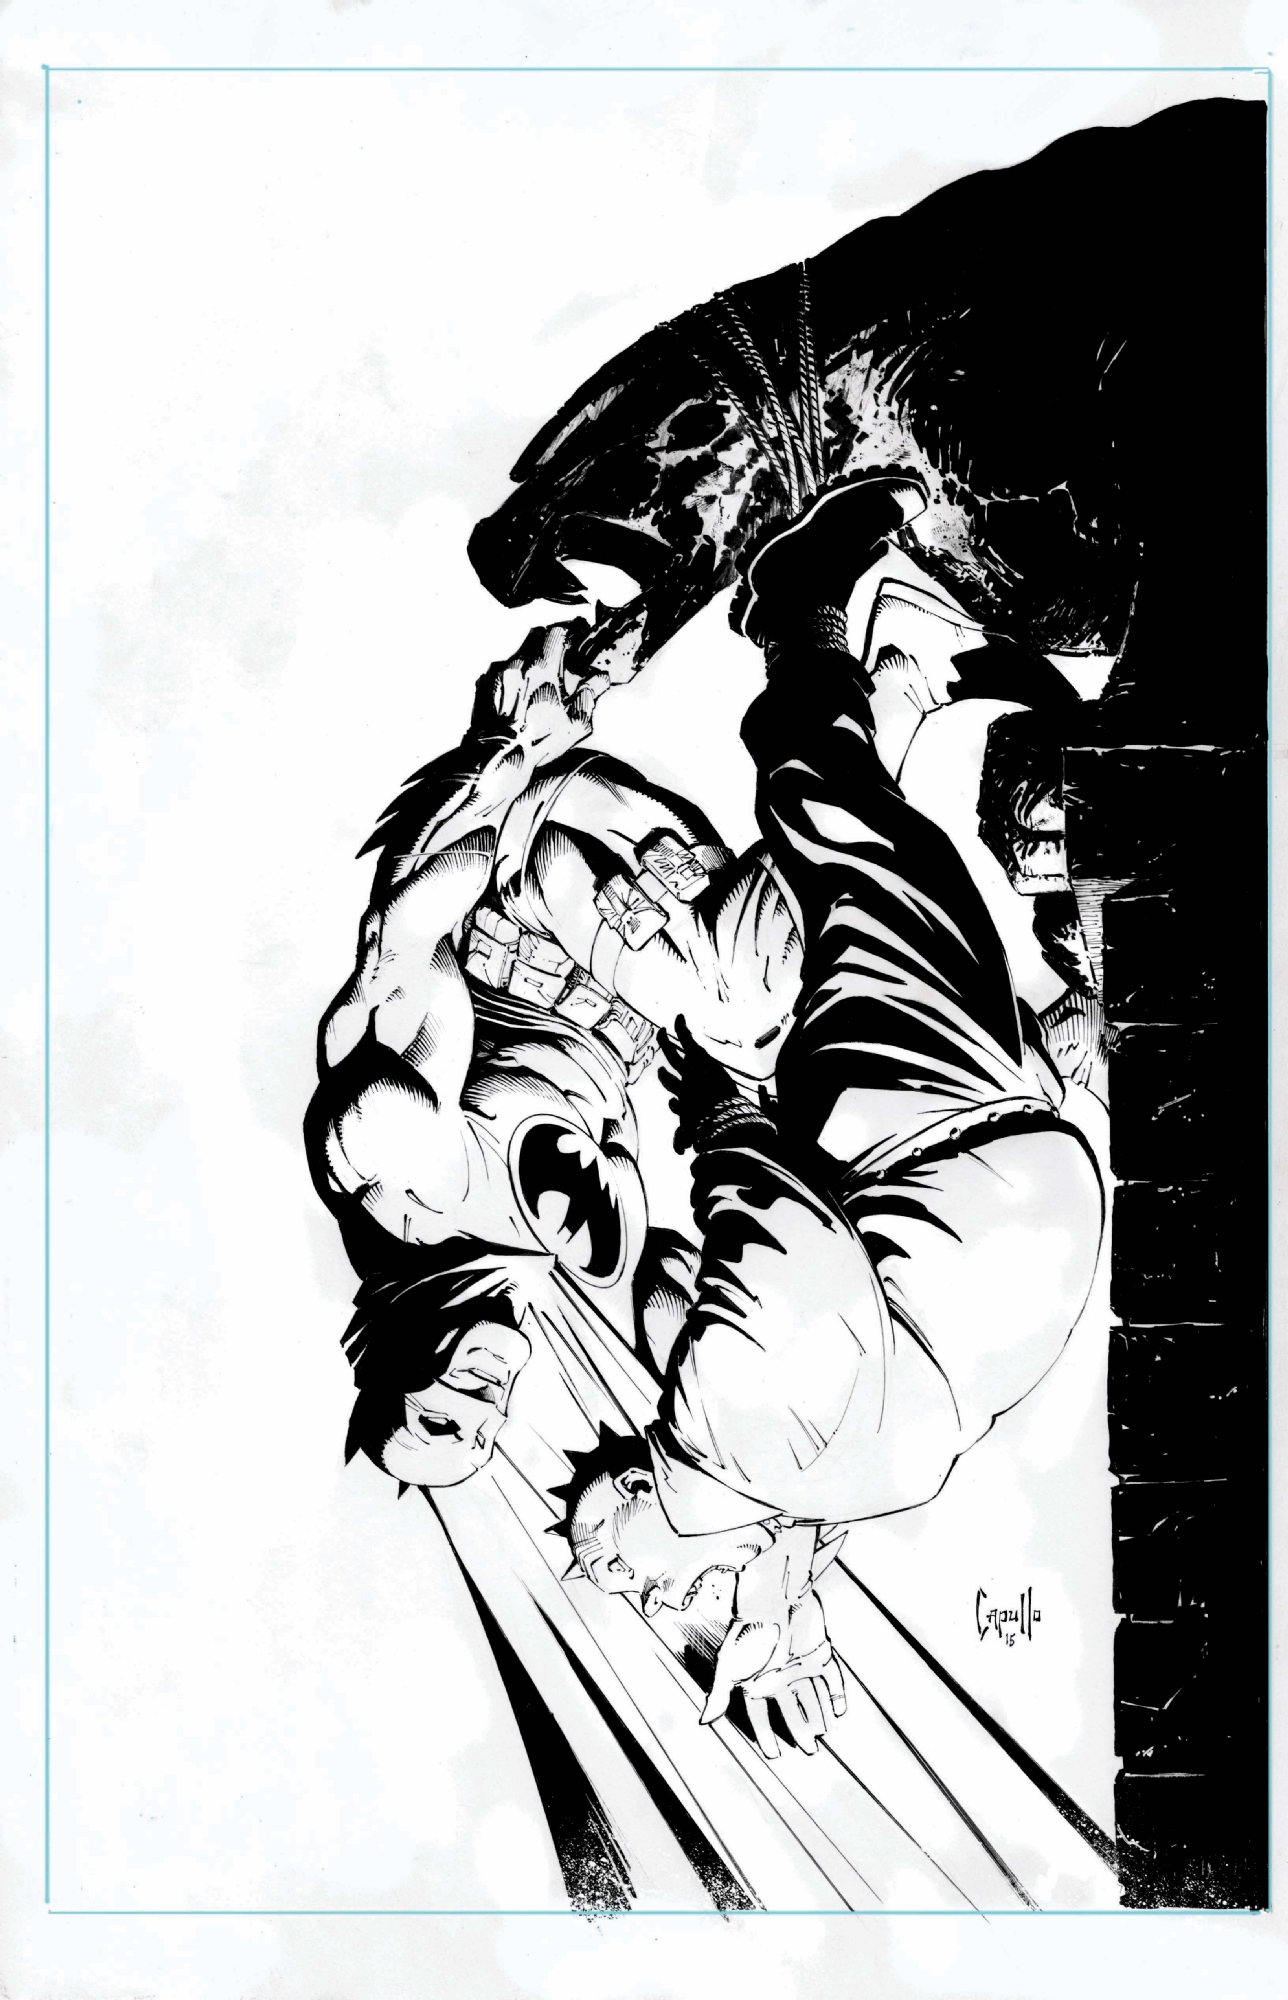 CAPULLO - BATMAN DK III Master Race Cover 4 - Frank Miller Dark Knight  Returns, in Tom Samot's Capullo Comic Art Gallery Room